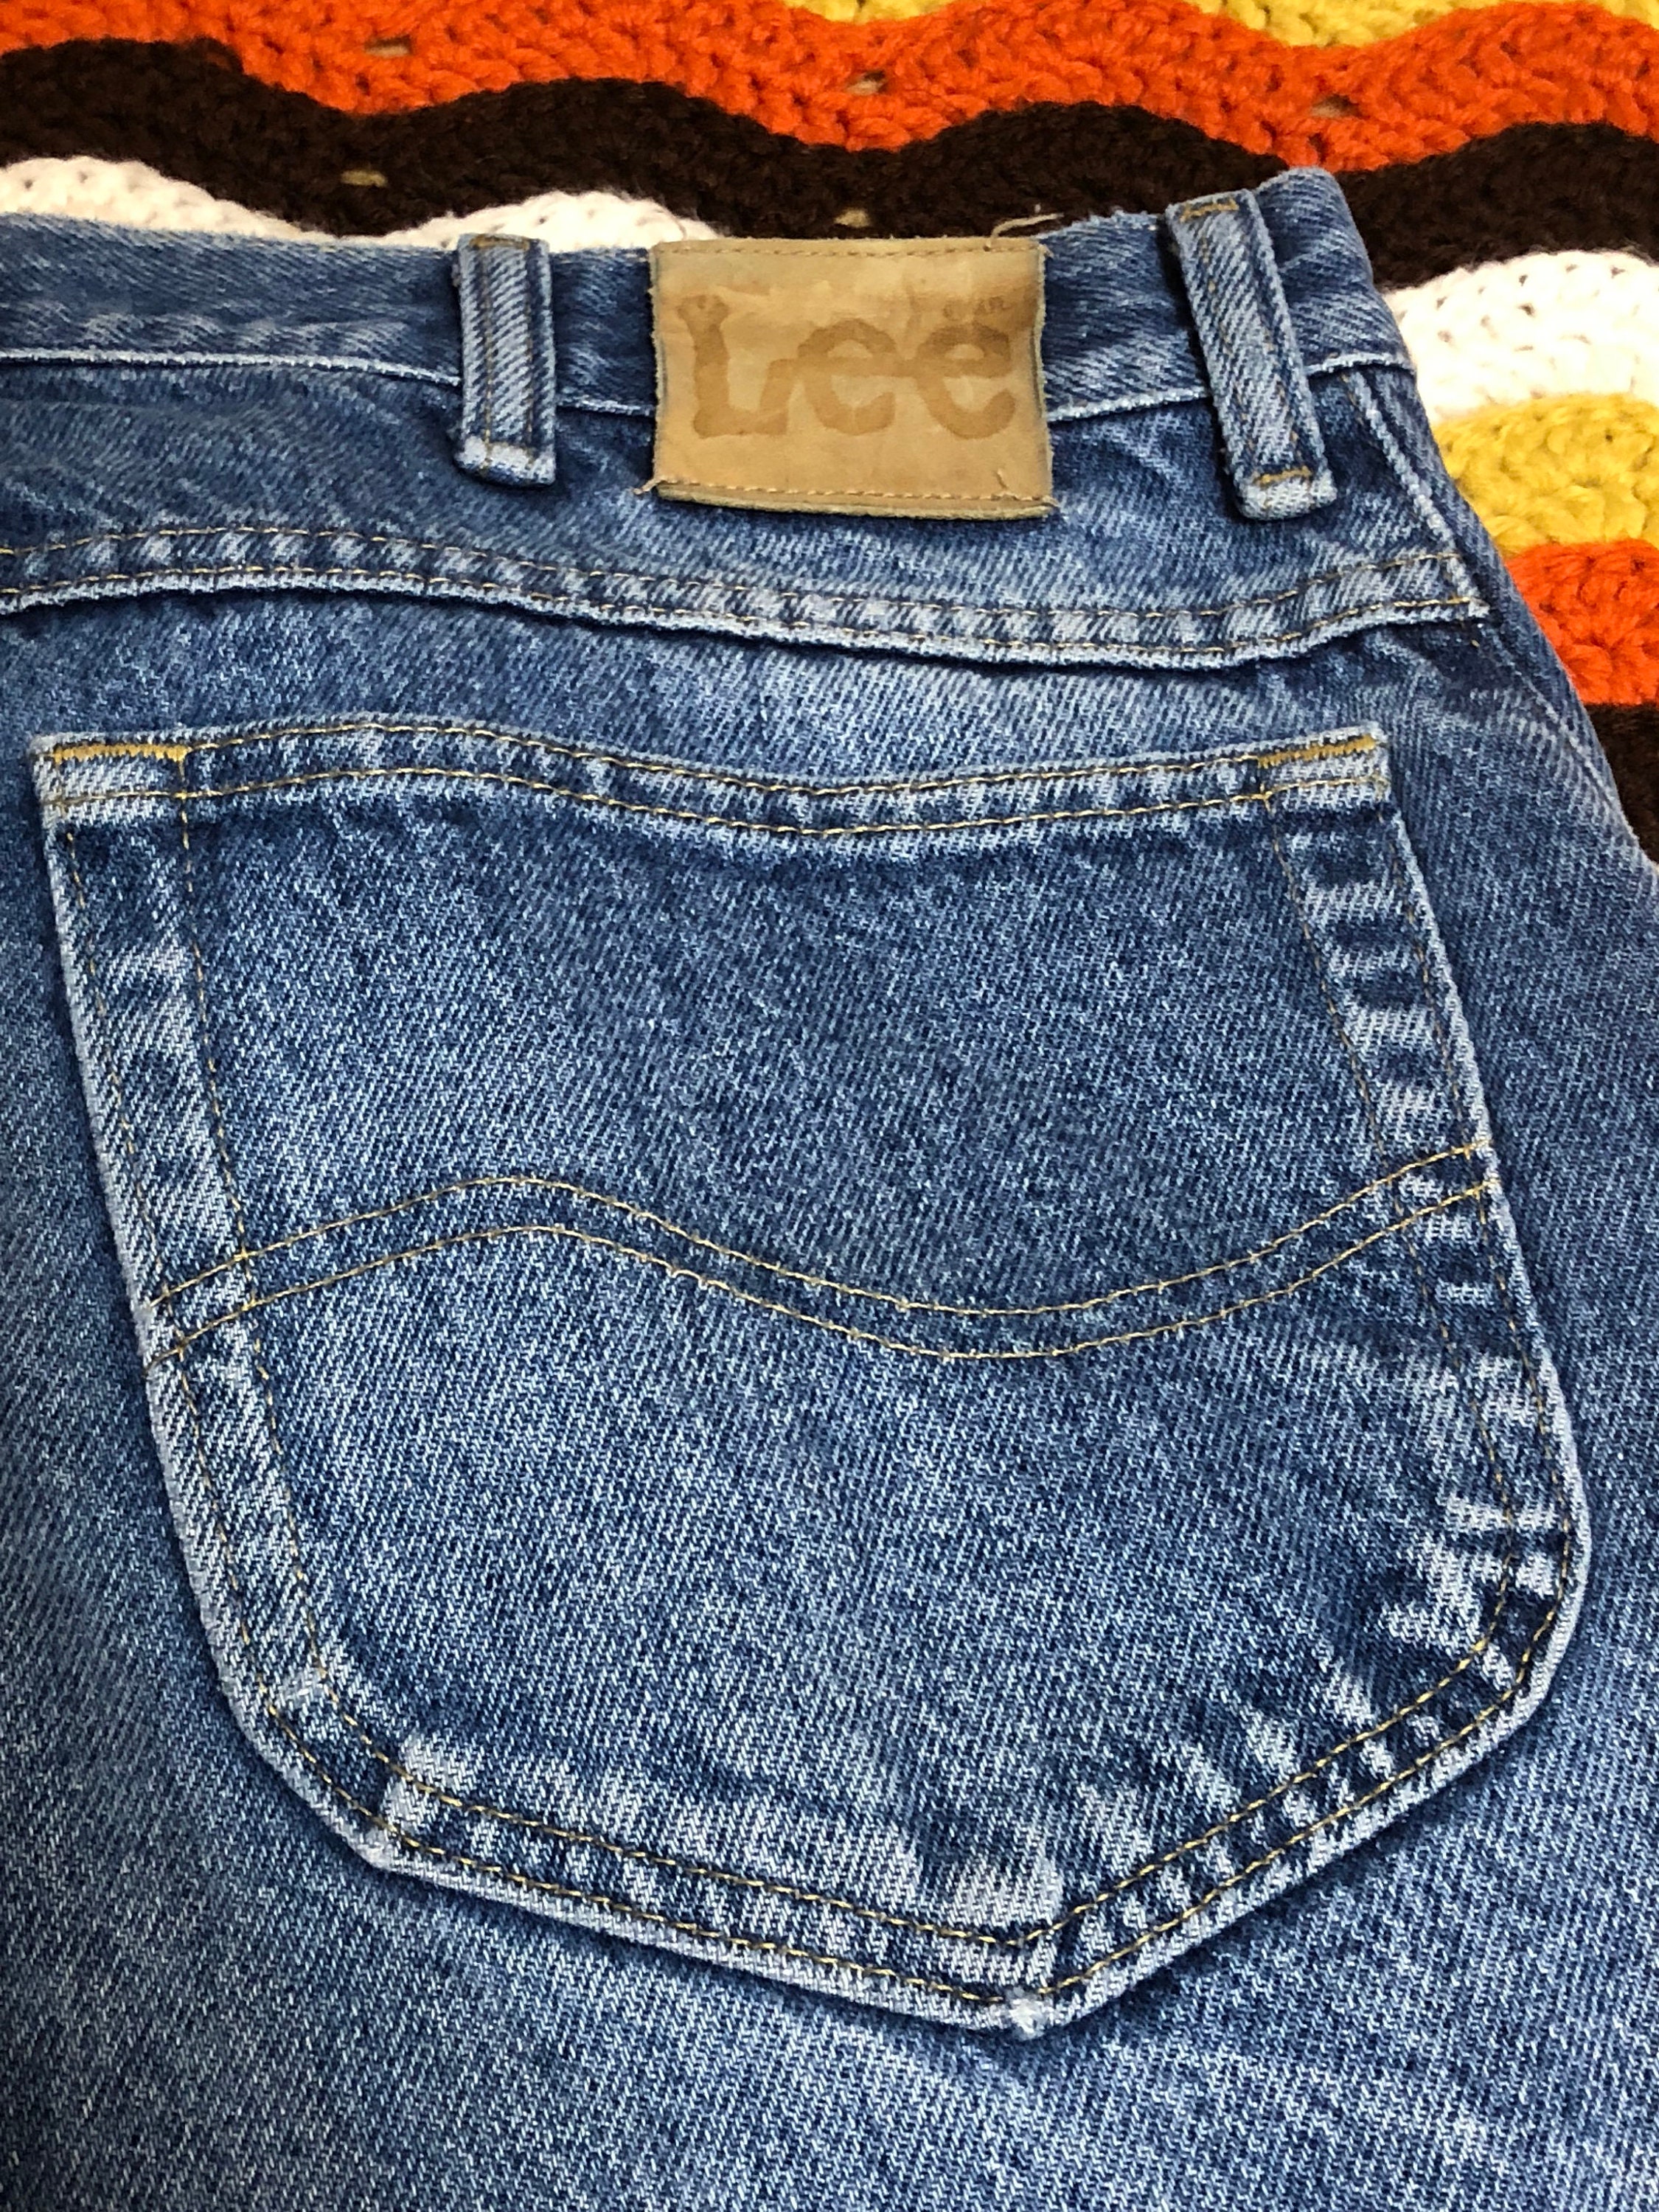 Vintage 80s Lee Blue Jeans Medium Wash | Etsy